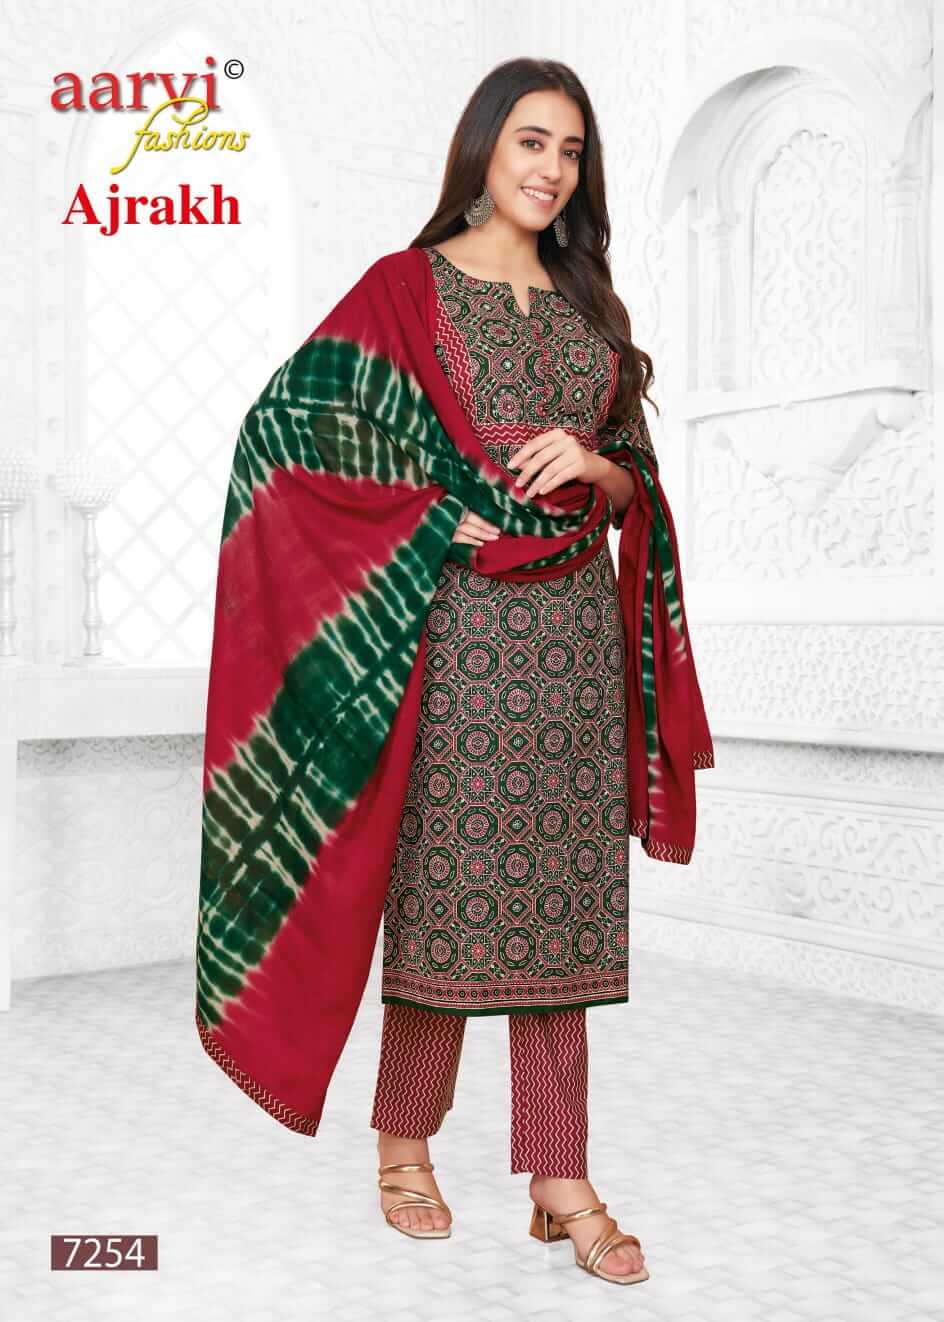 Aarvi Fashions Ajrakh Vol 2 Cotton Salwar Kameez Catalog collection 4